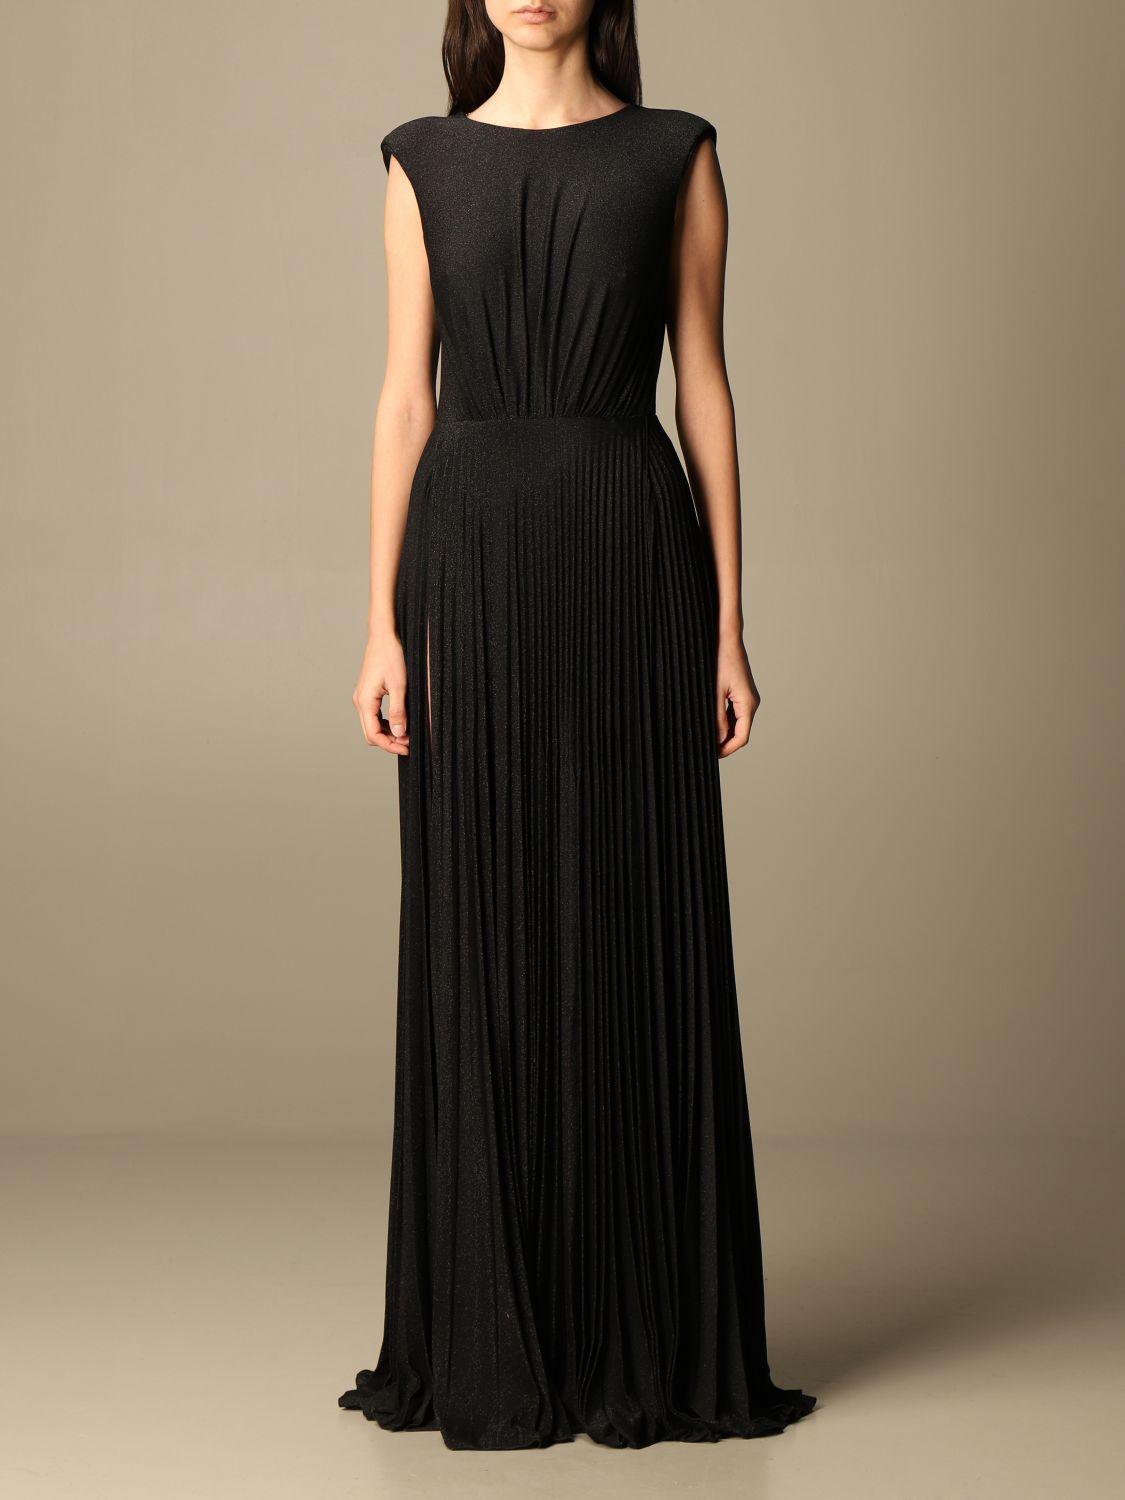 Elisabetta Franchi Dress in Black | Lyst